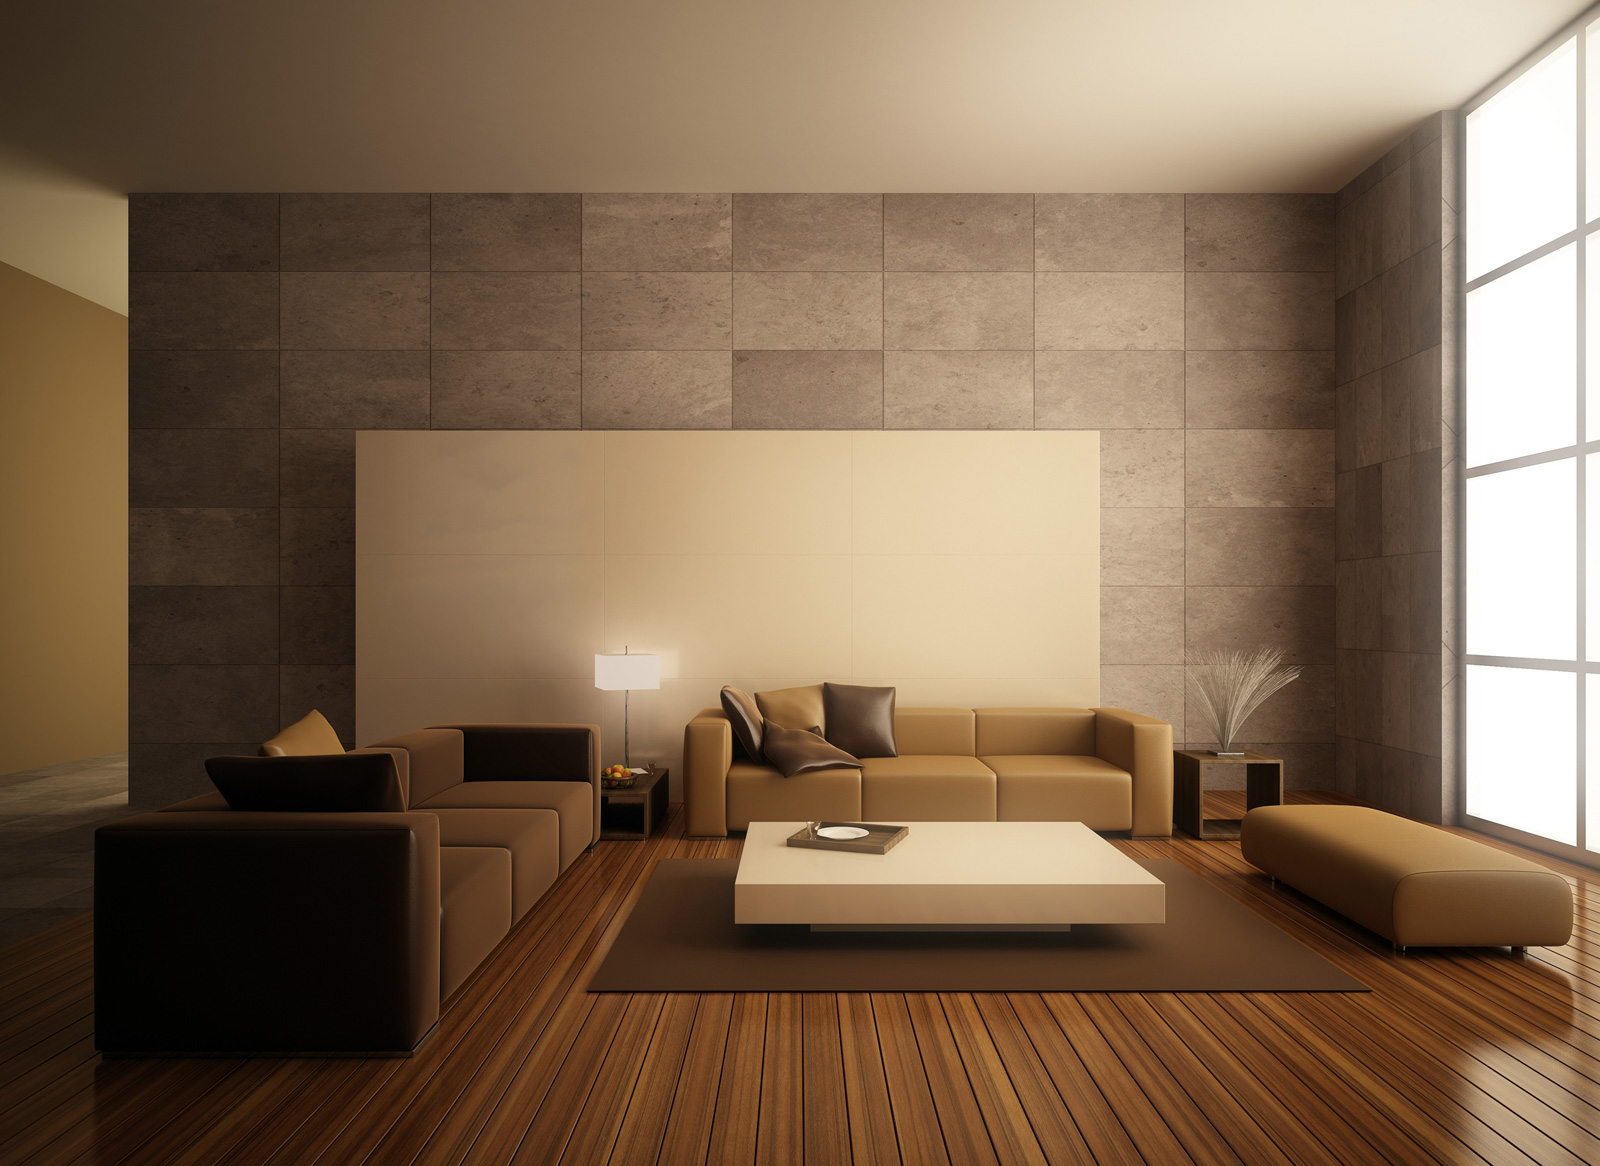 16 breathtaking minimalist interior design ideas for Idee interior design